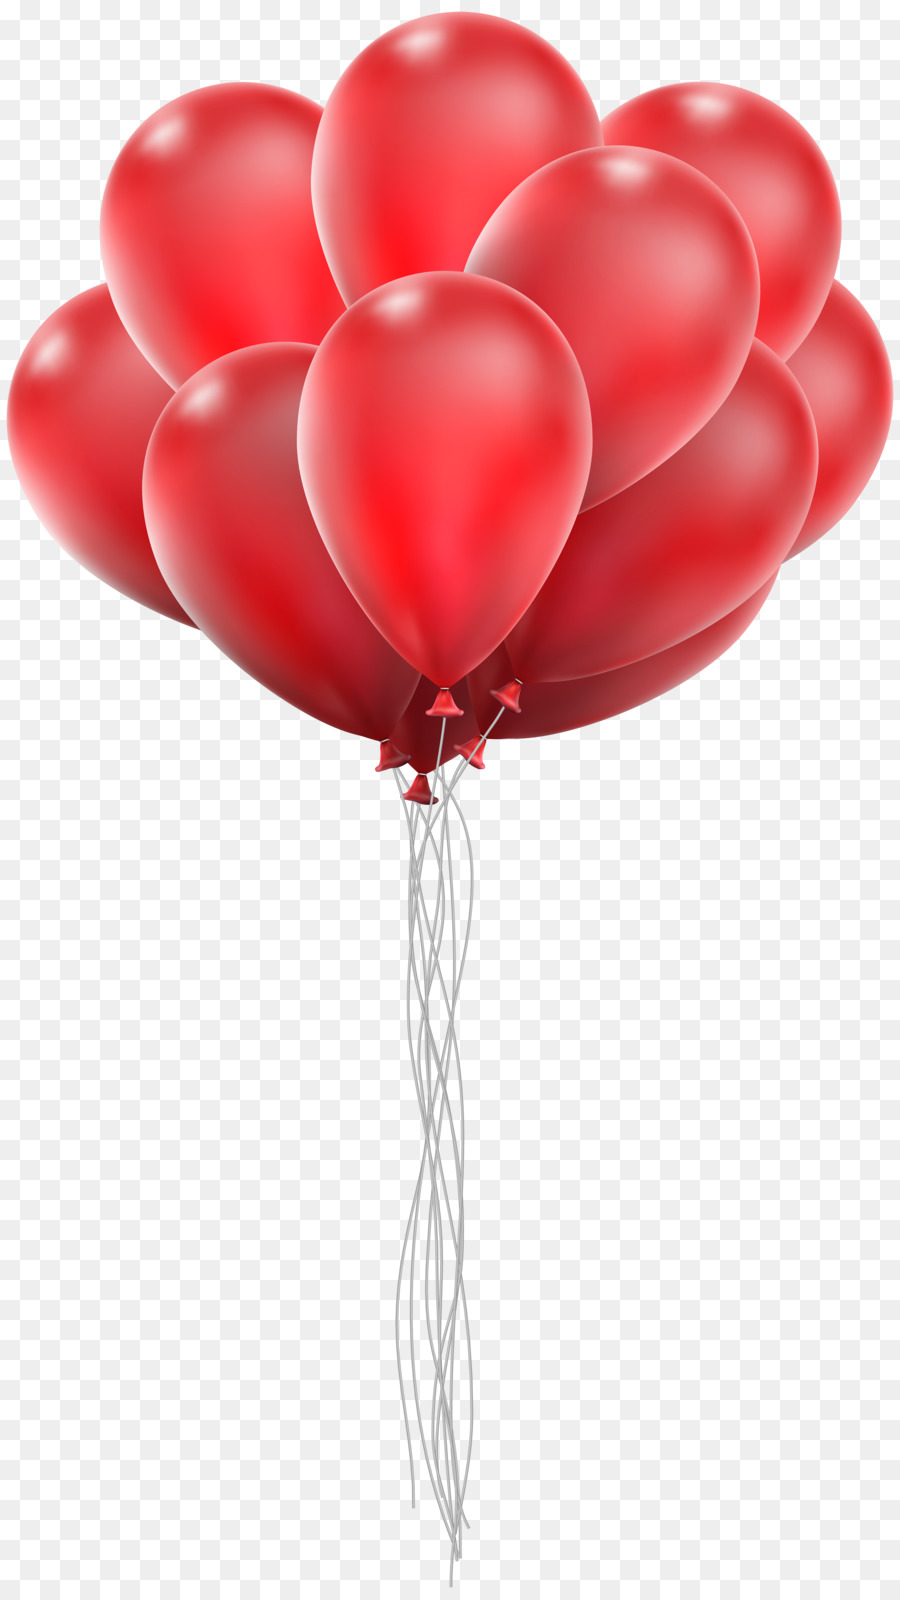 Balloon Clip art - balloon png download - 4504*8000 - Free Transparent Balloon png Download.